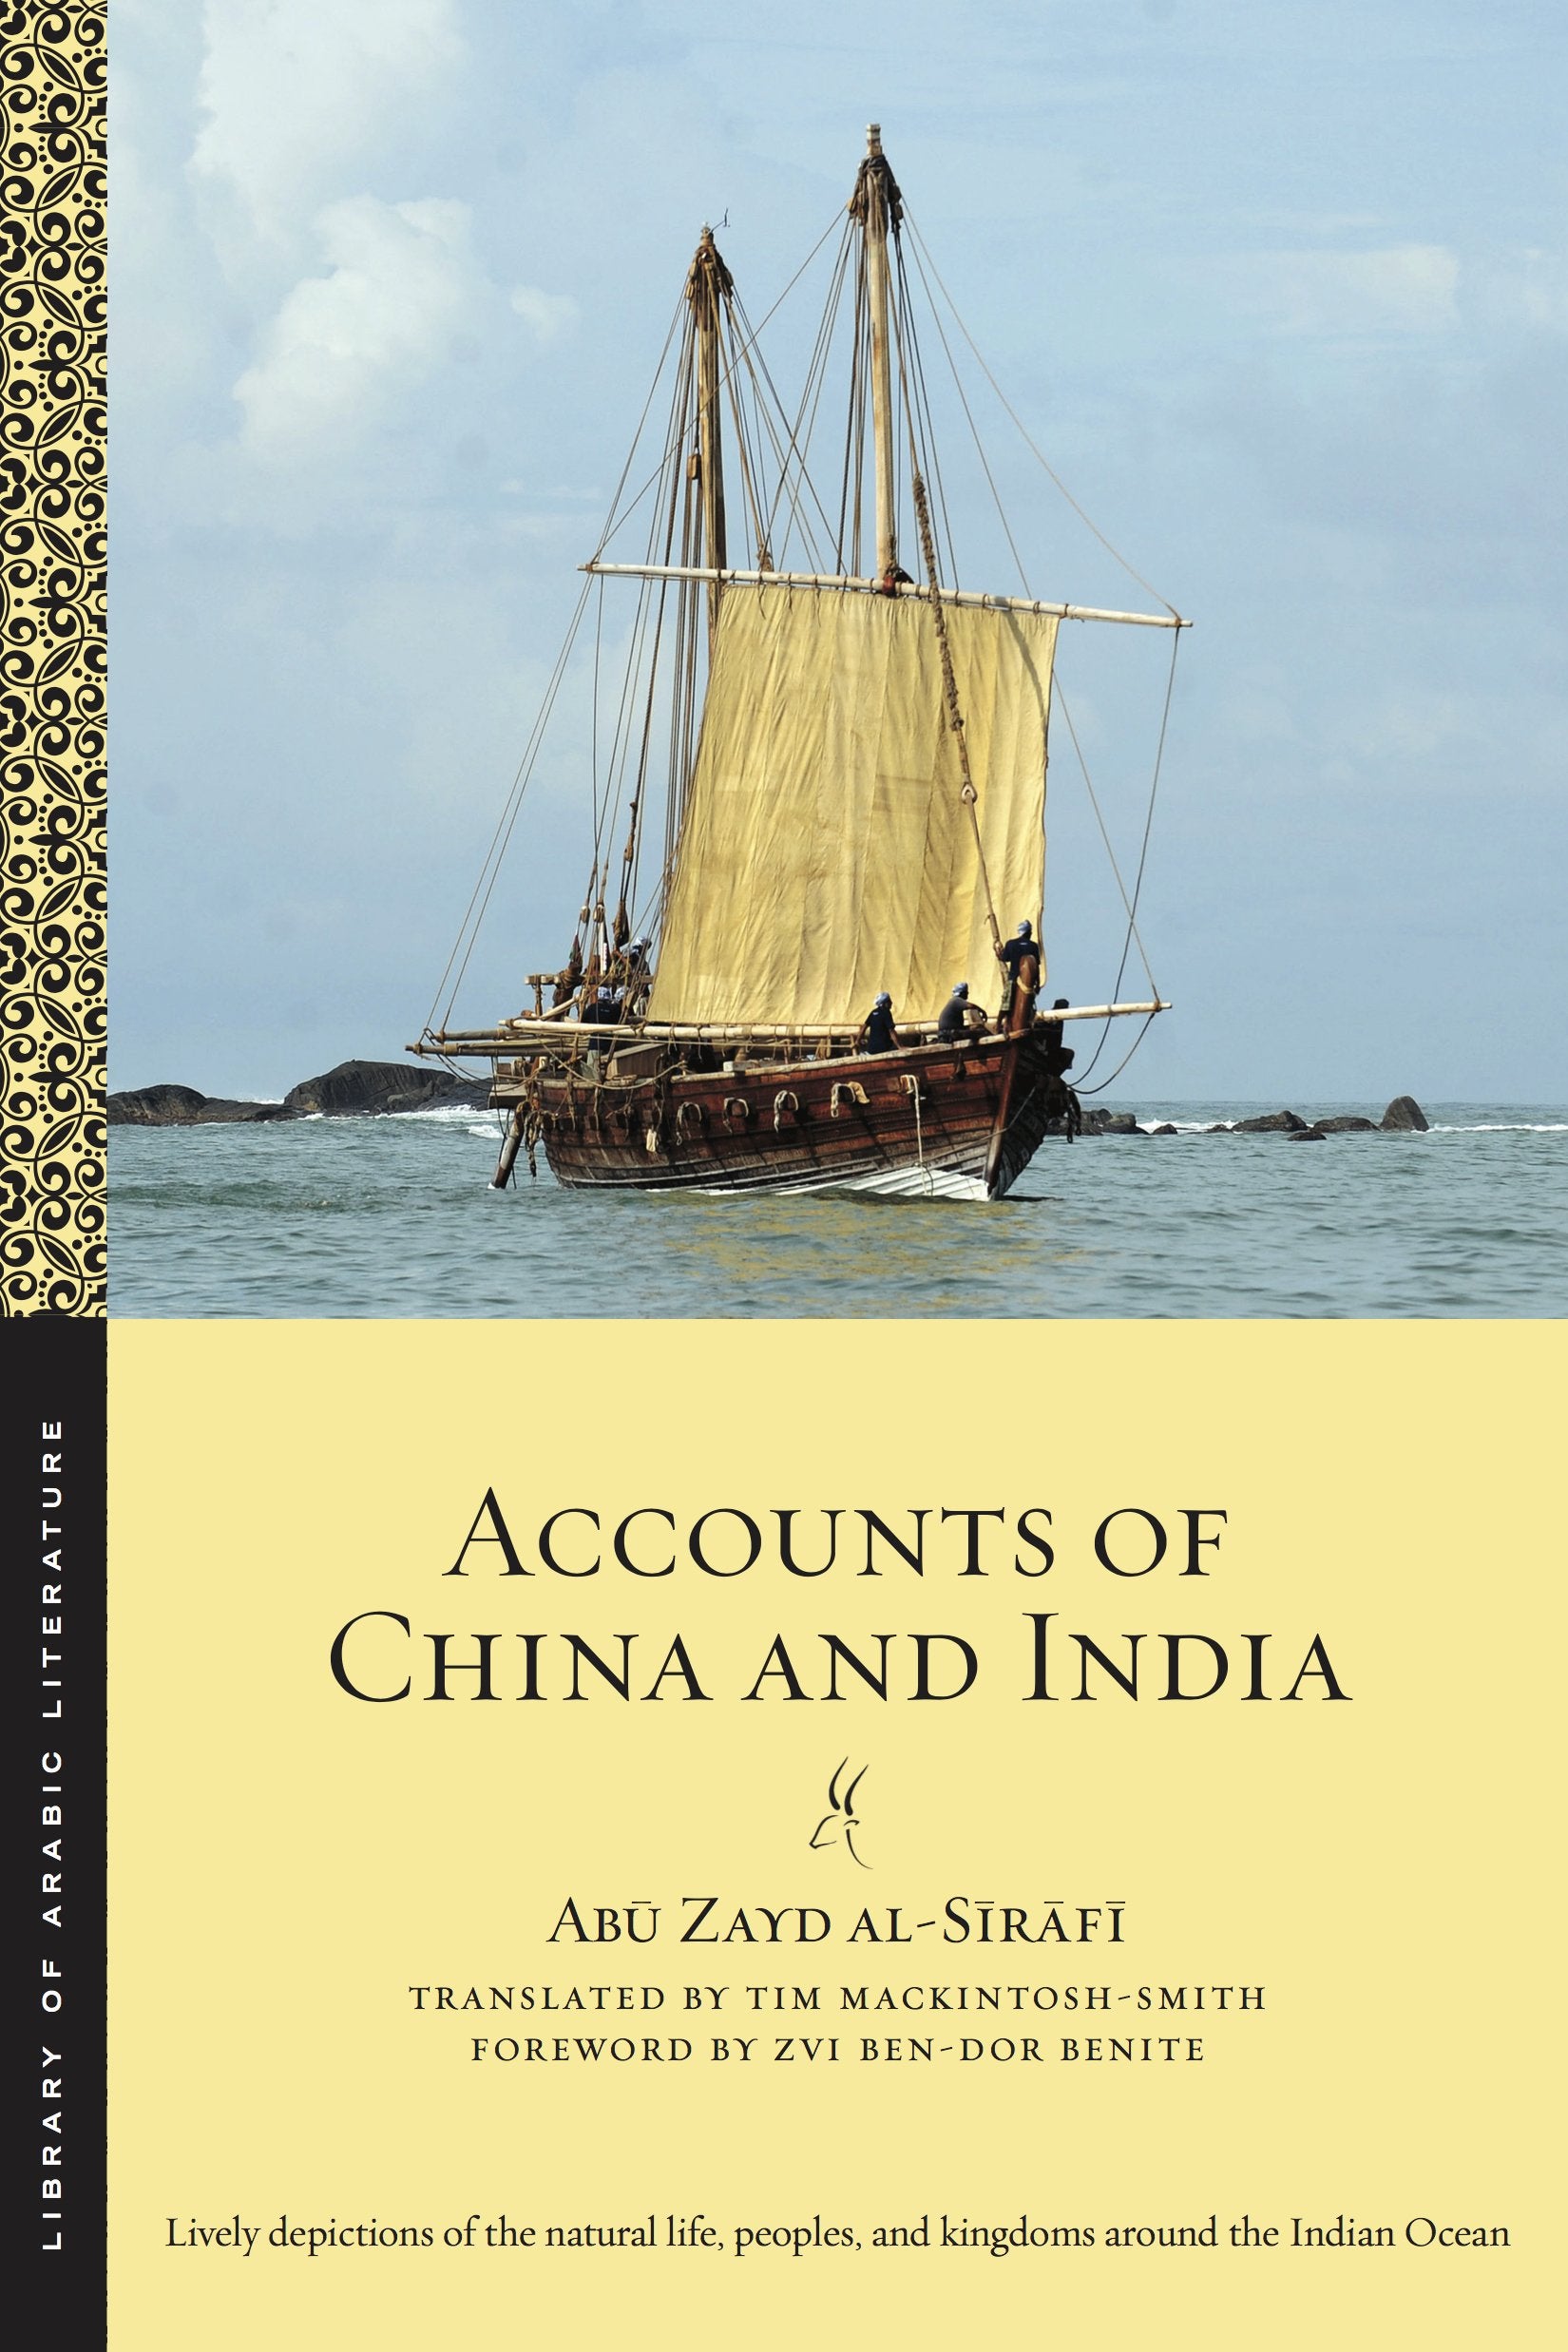 Accounts of China and India - Abu Zayd al-Sirafi (Author), Zvi Ben-Dor Benite (Foreword), Tim Mackintosh-Smith (Translator)